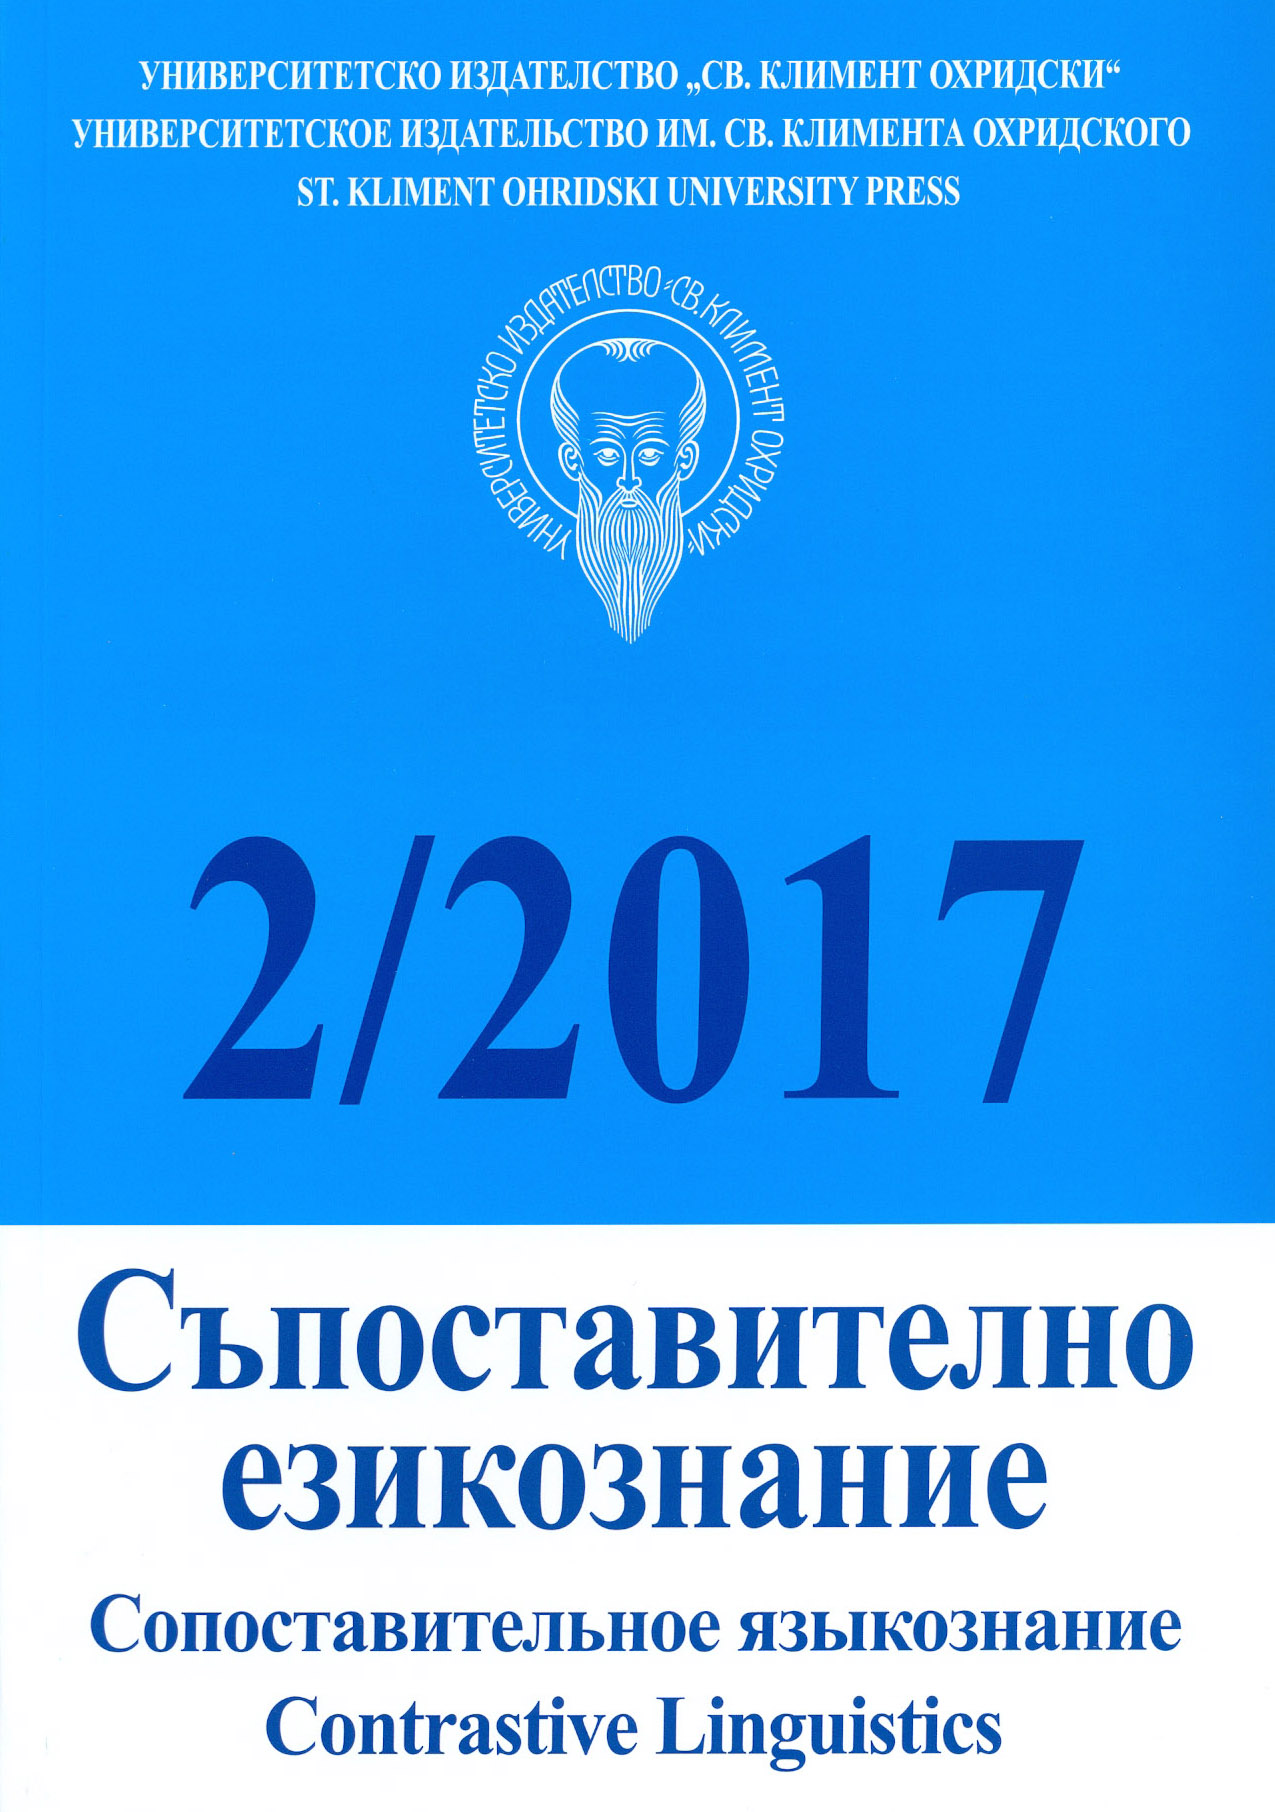 I. Geneva-Puhaleva. EU Terminology. A compariosn of Bulgarian, Greek, Polsih and English Environmental Law Terminology Cover Image